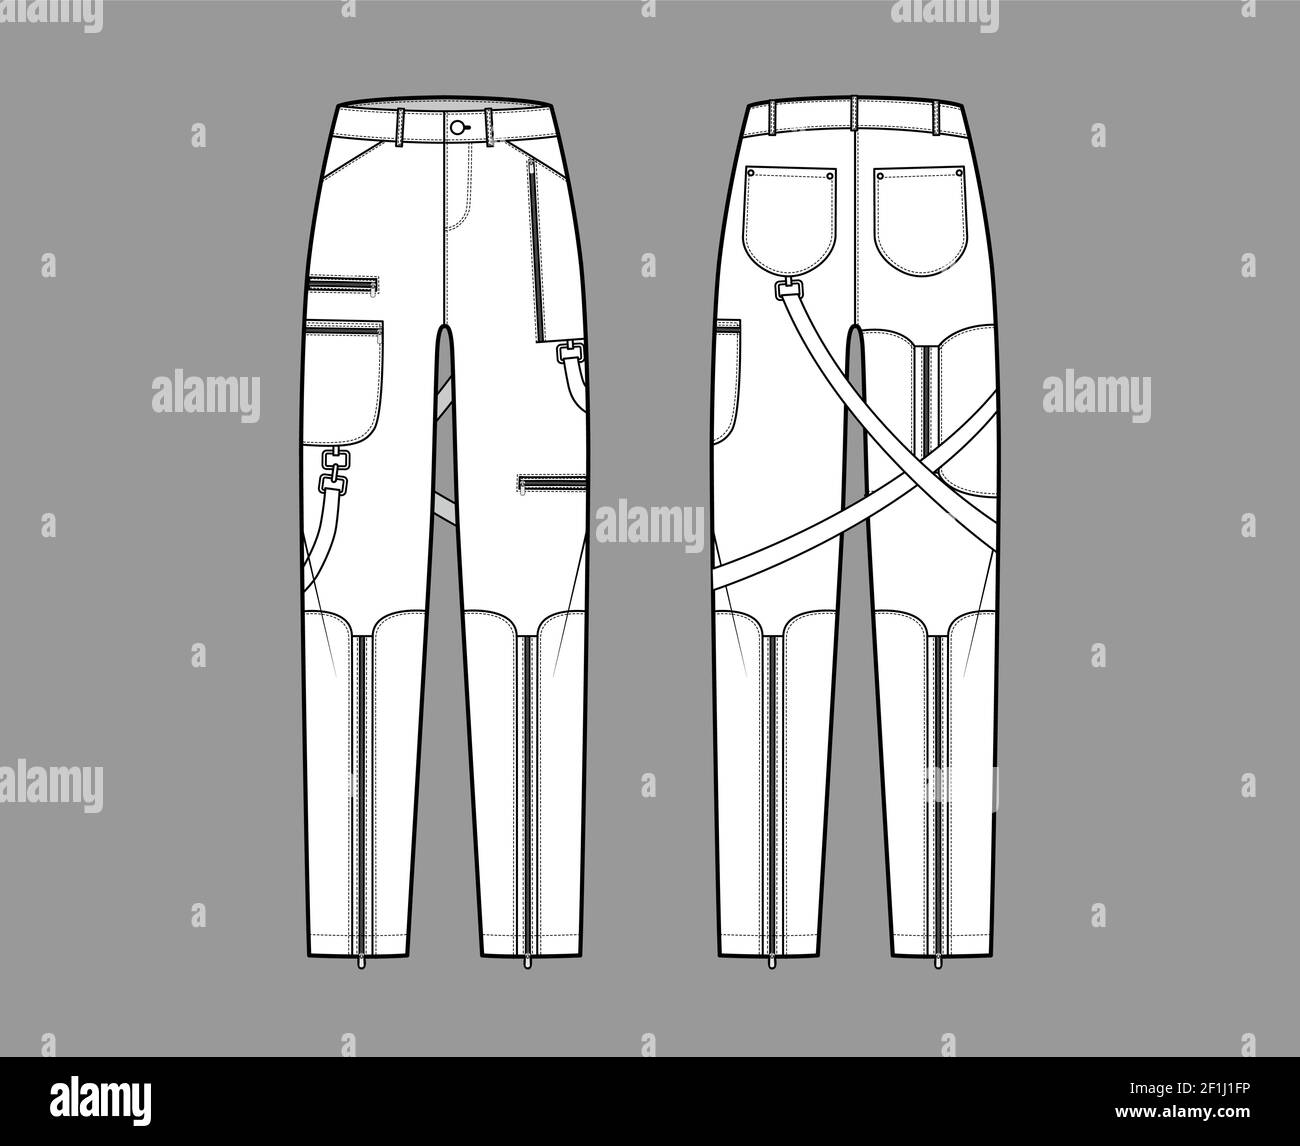 Bondage pants technical fashion illustration with low waist, rise ...